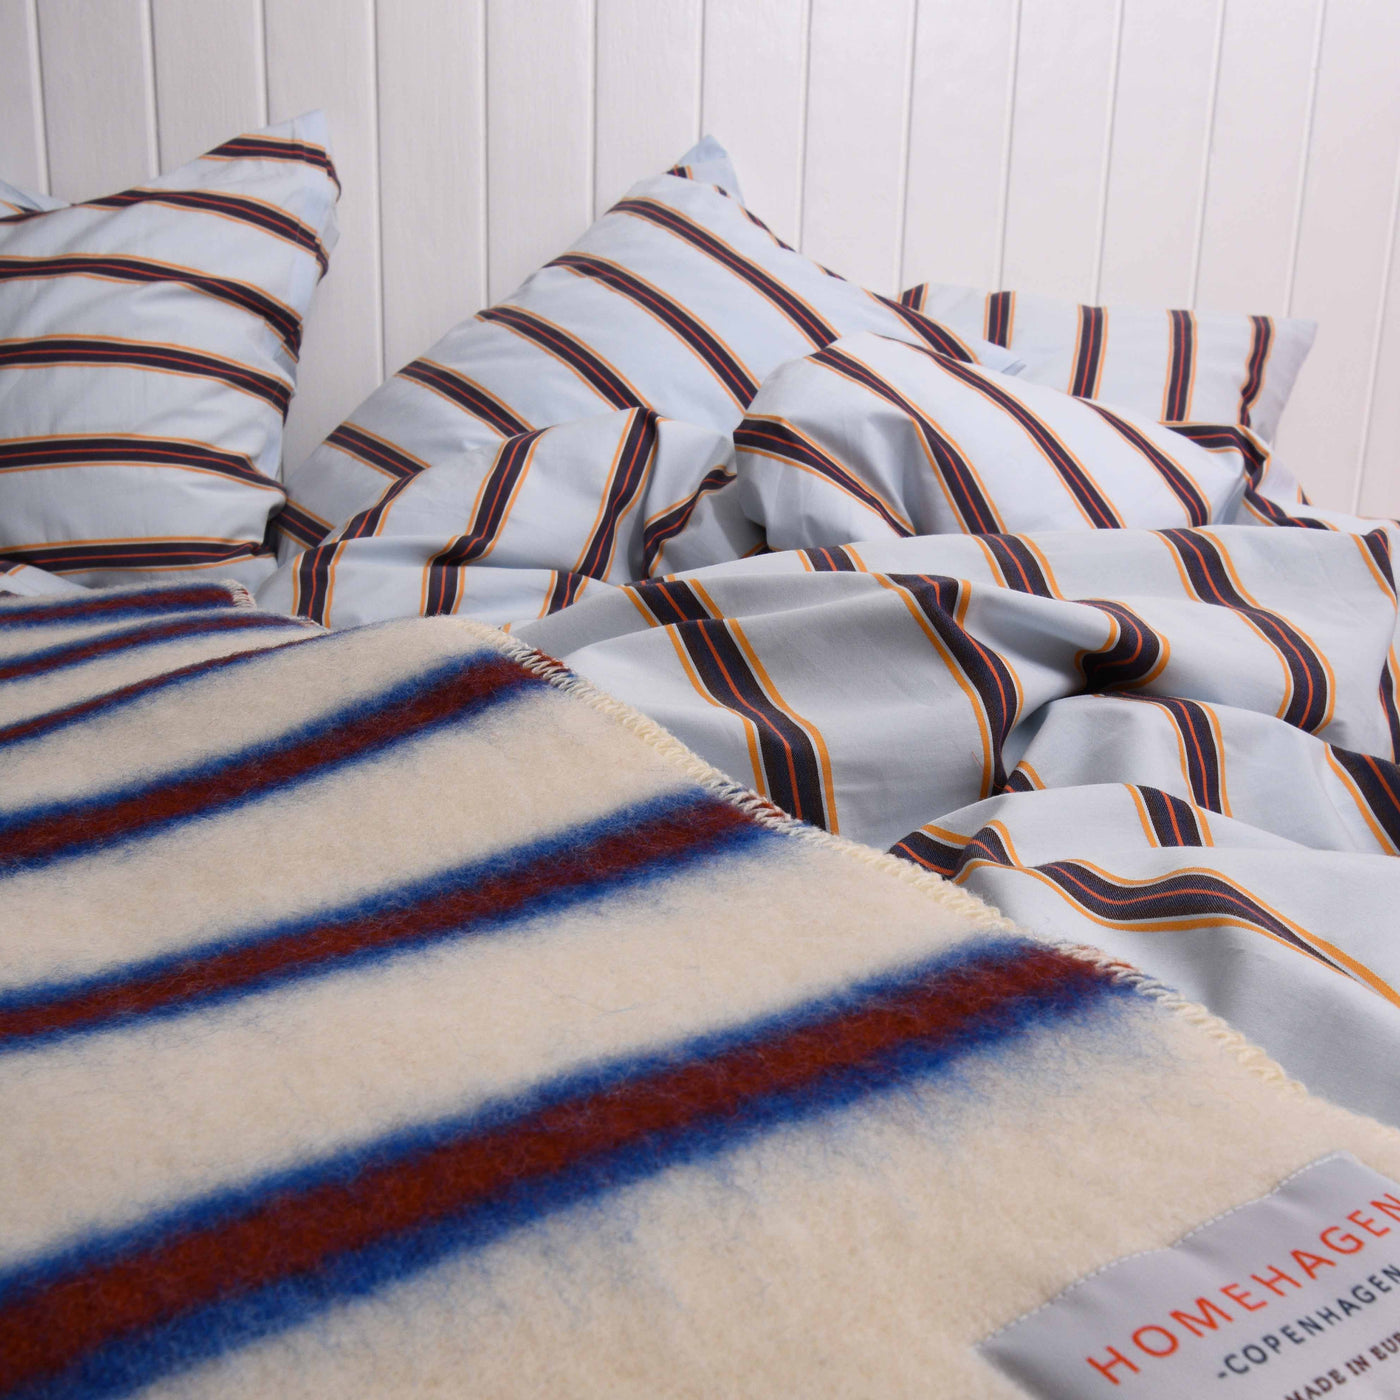 COTTON PERCALE stripe bedding Blue dobby stripe